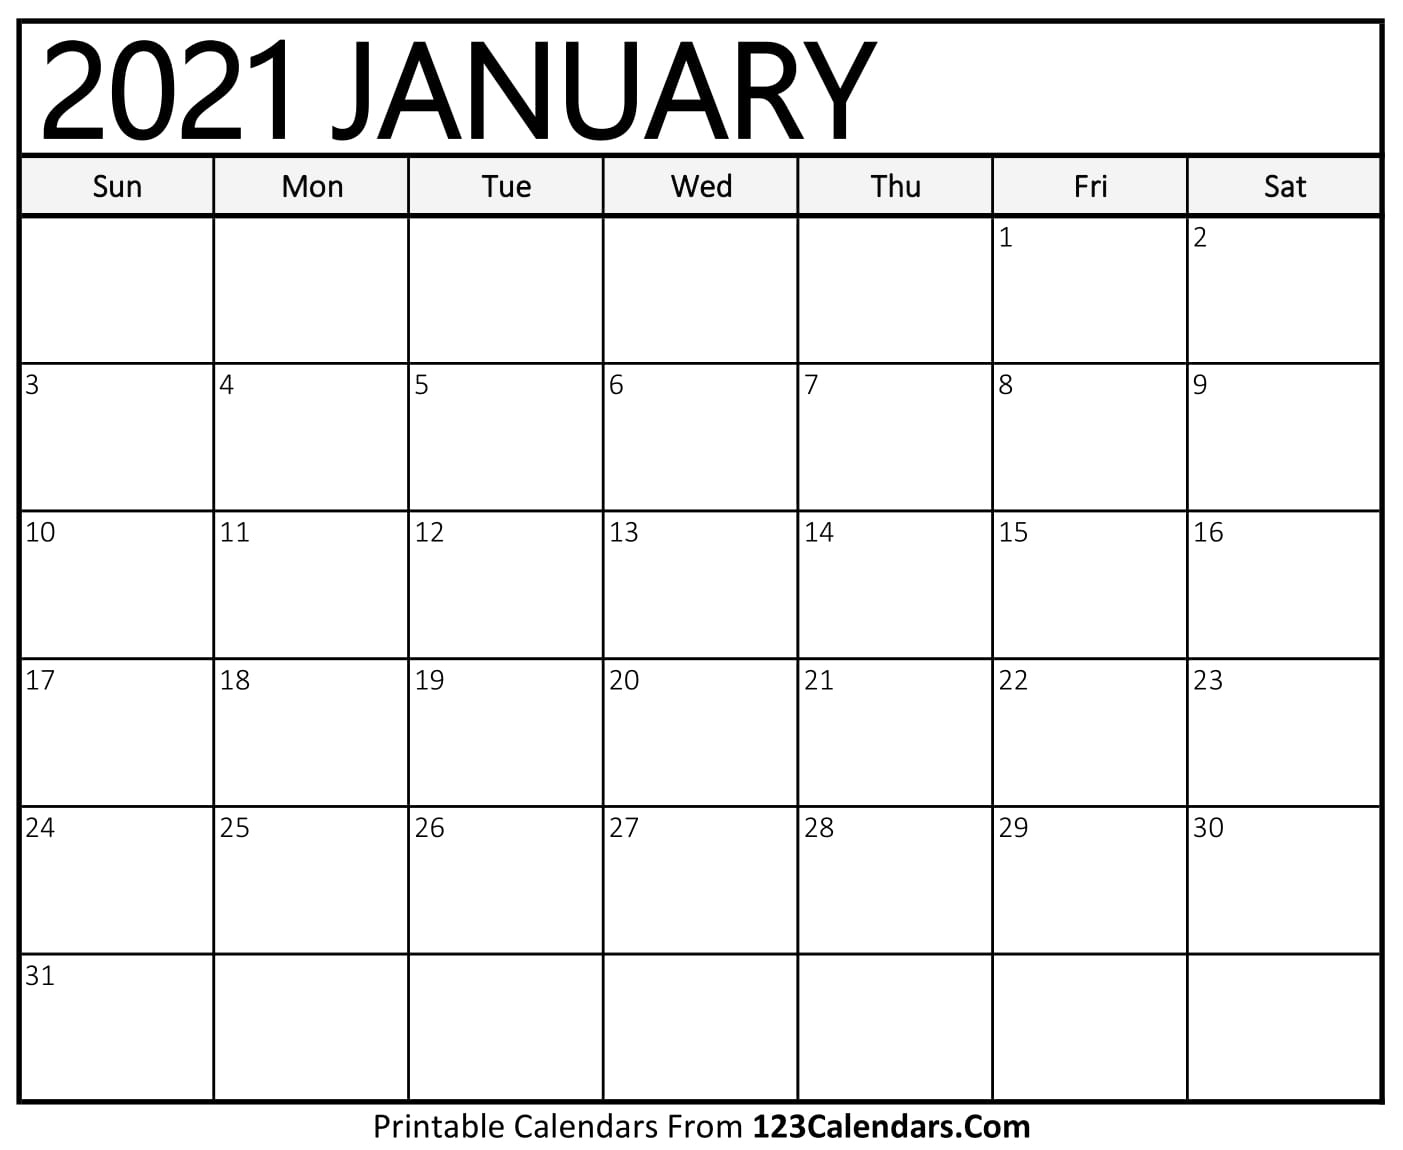 2021 Printable Calendar | 123Calendars Printable Lined Monthly Calendar Pdf 2021